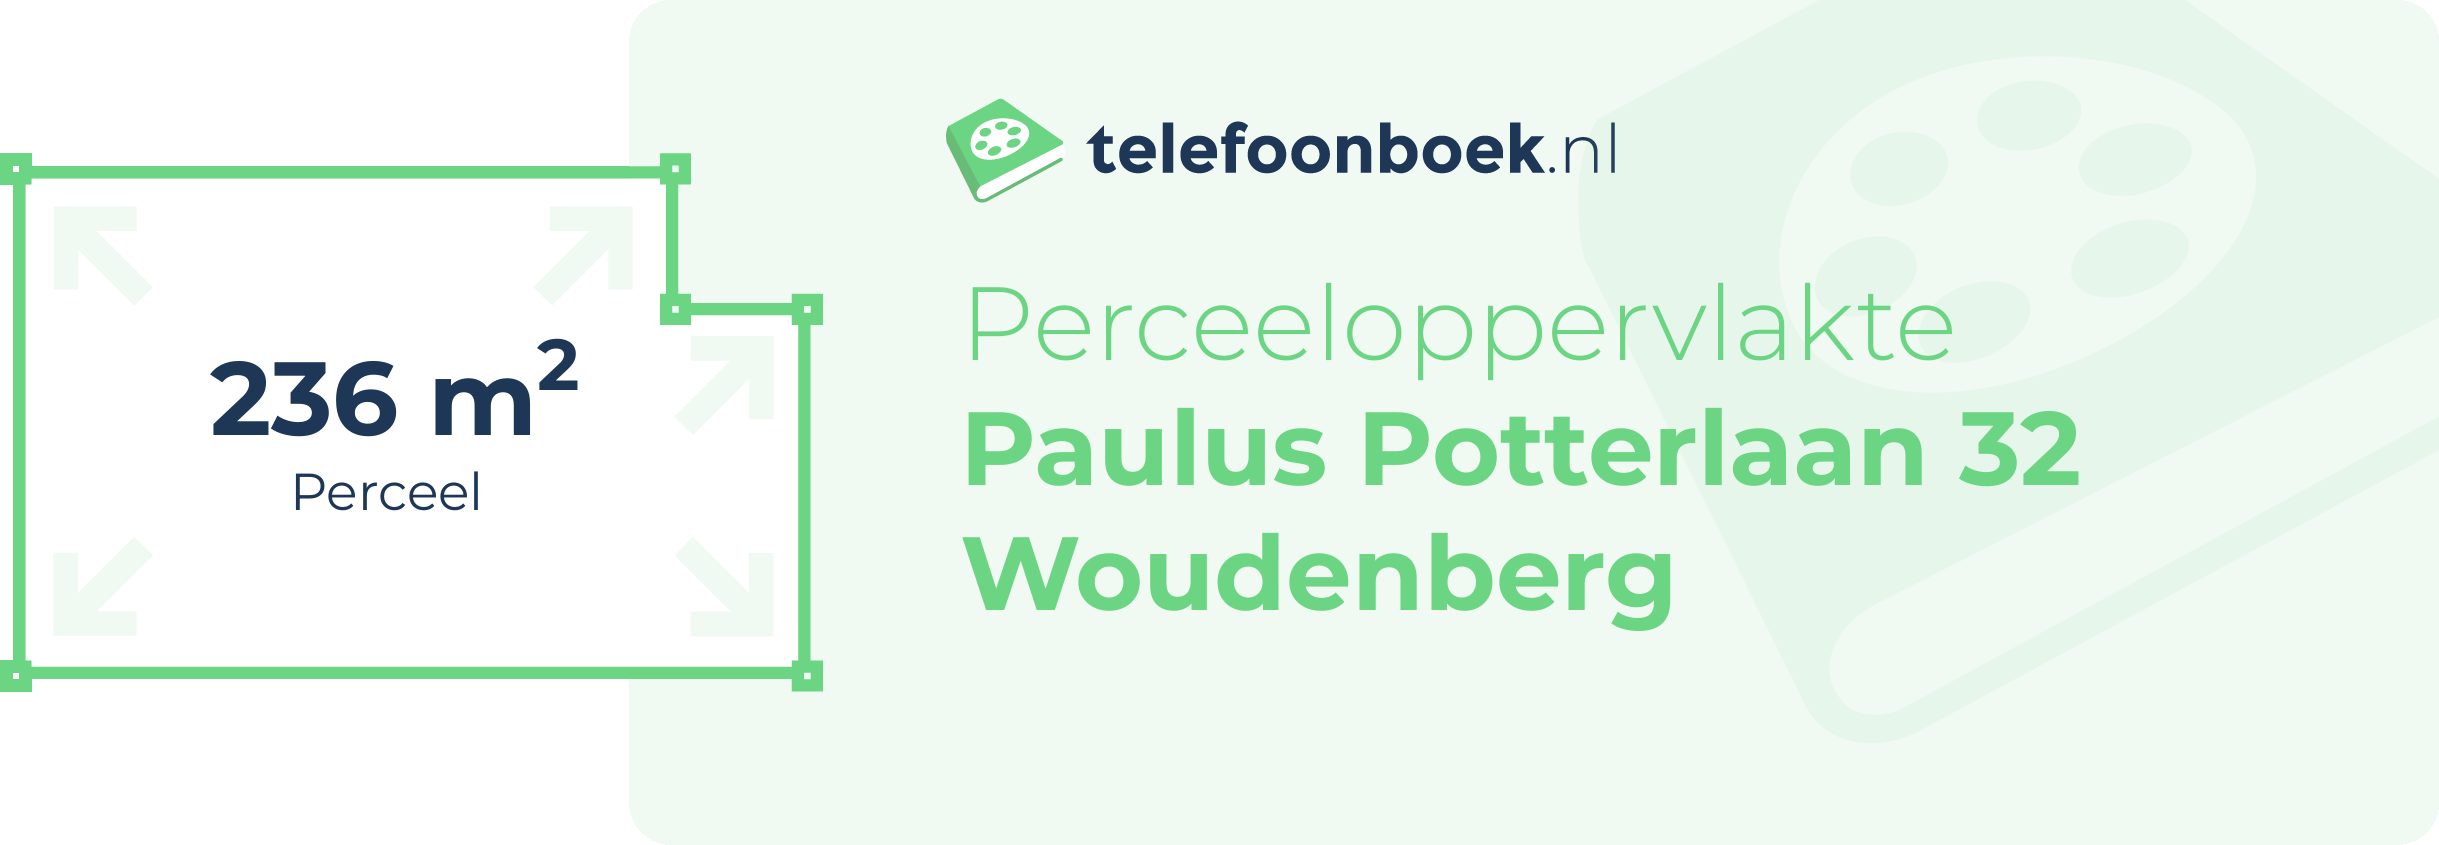 Perceeloppervlakte Paulus Potterlaan 32 Woudenberg